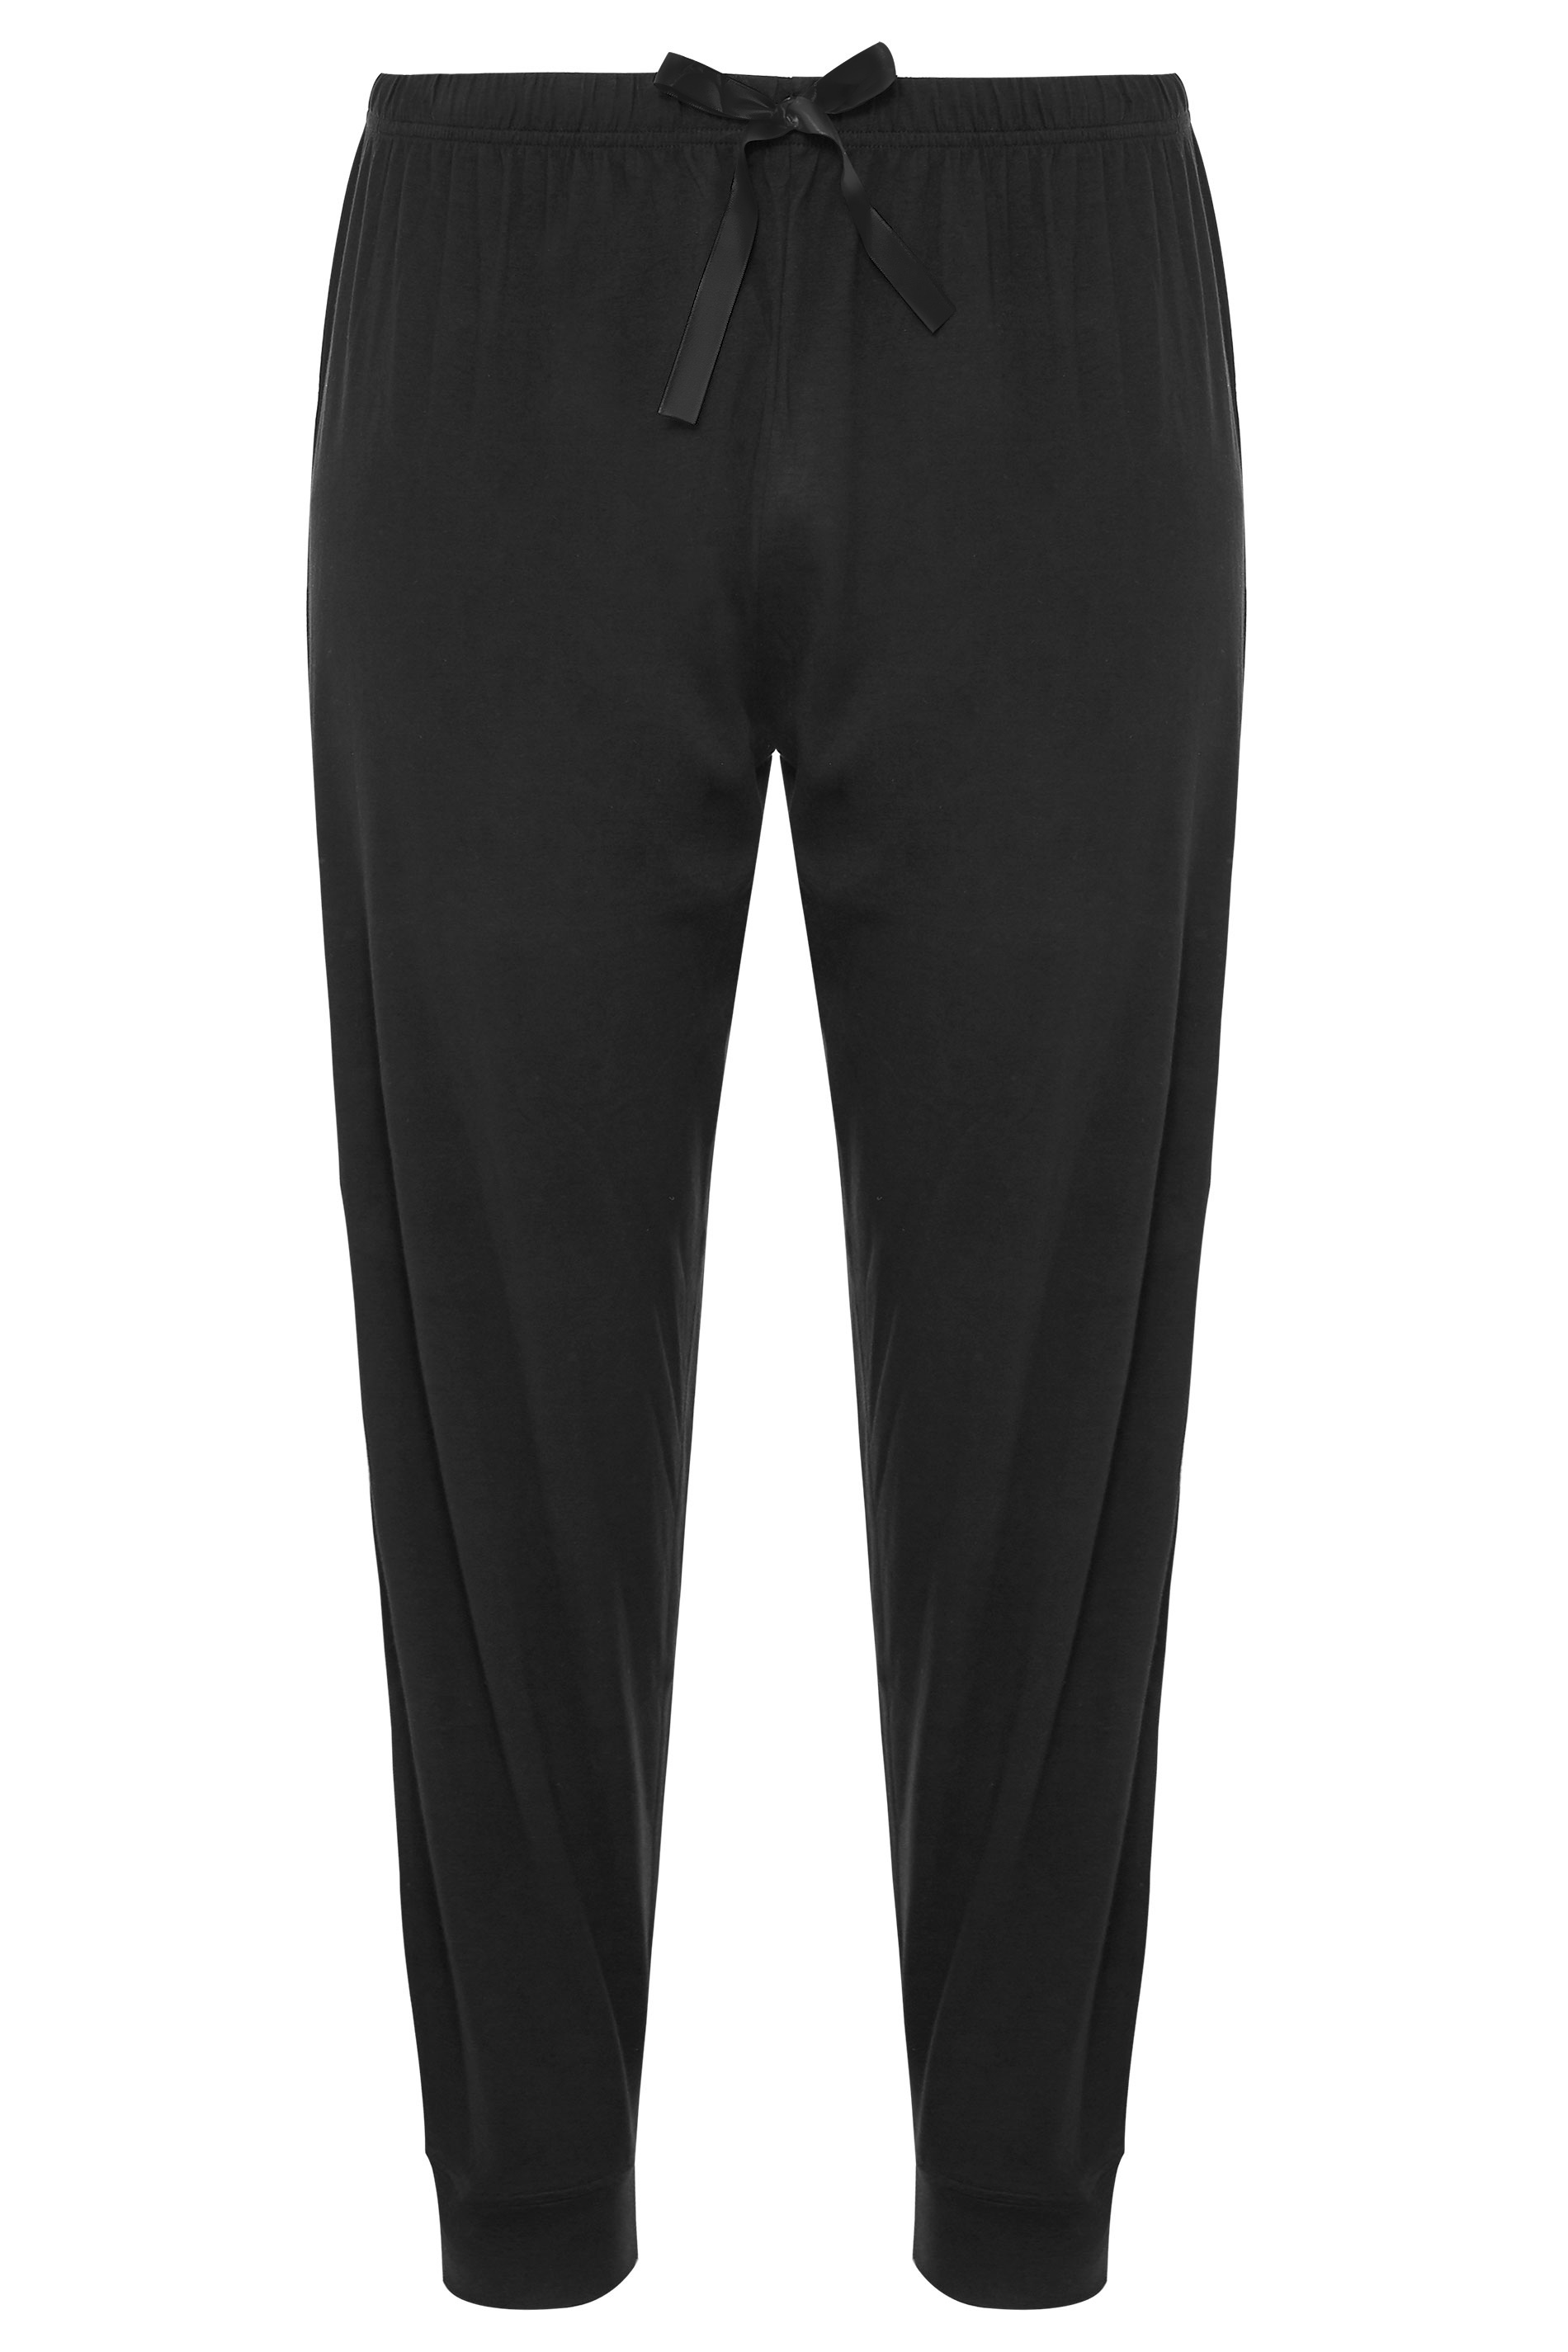 Plus Size Black Cuffed Pyjama Bottoms | Yours Clothing 3